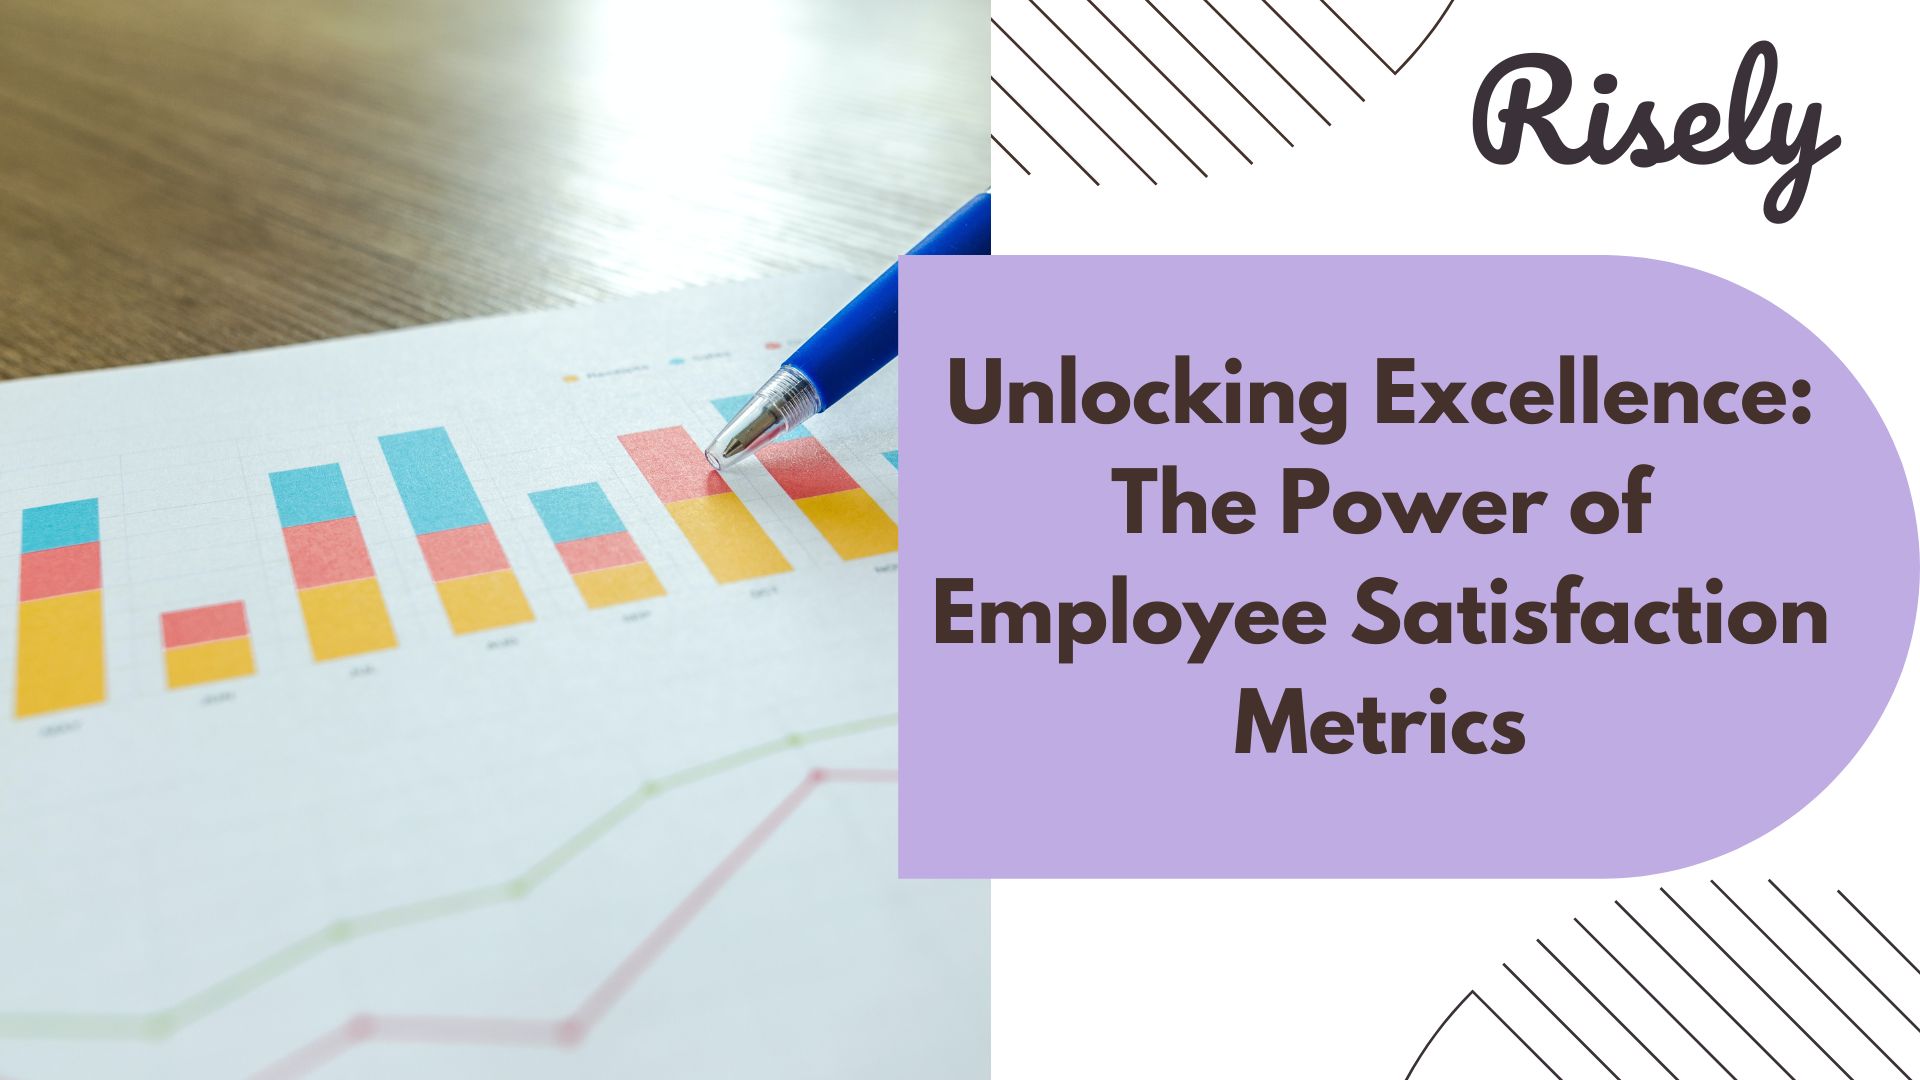 Unlocking Excellence: The Power of Employee Satisfaction Metrics